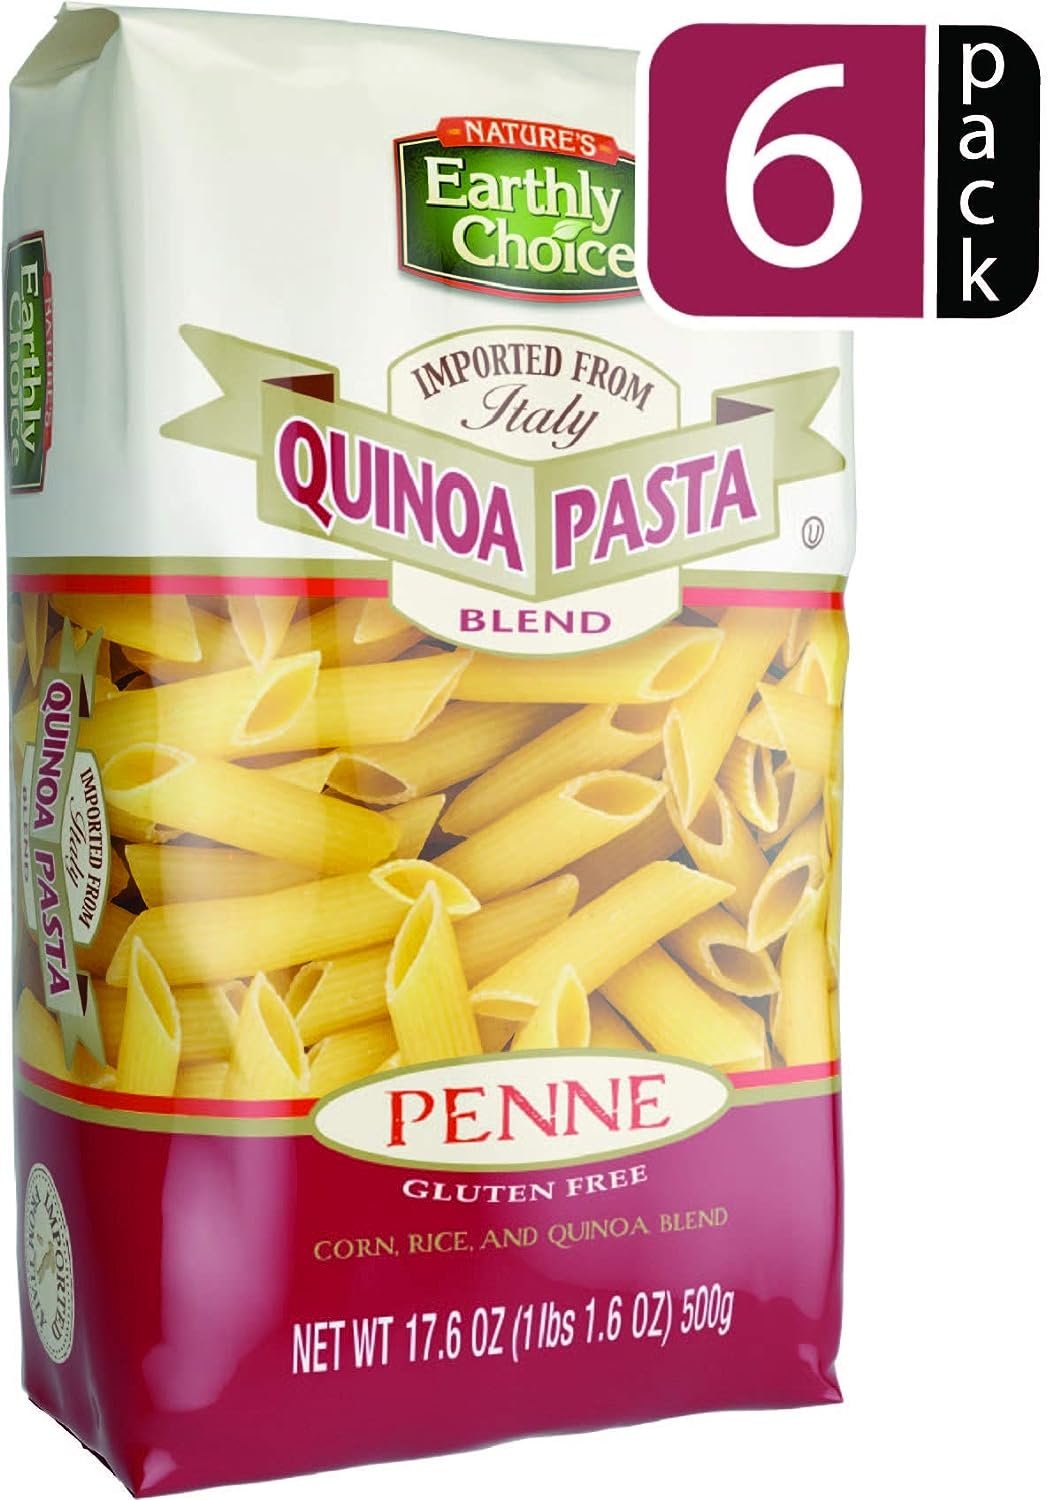 Nature's Earthly Choice Quinoa Pasta*